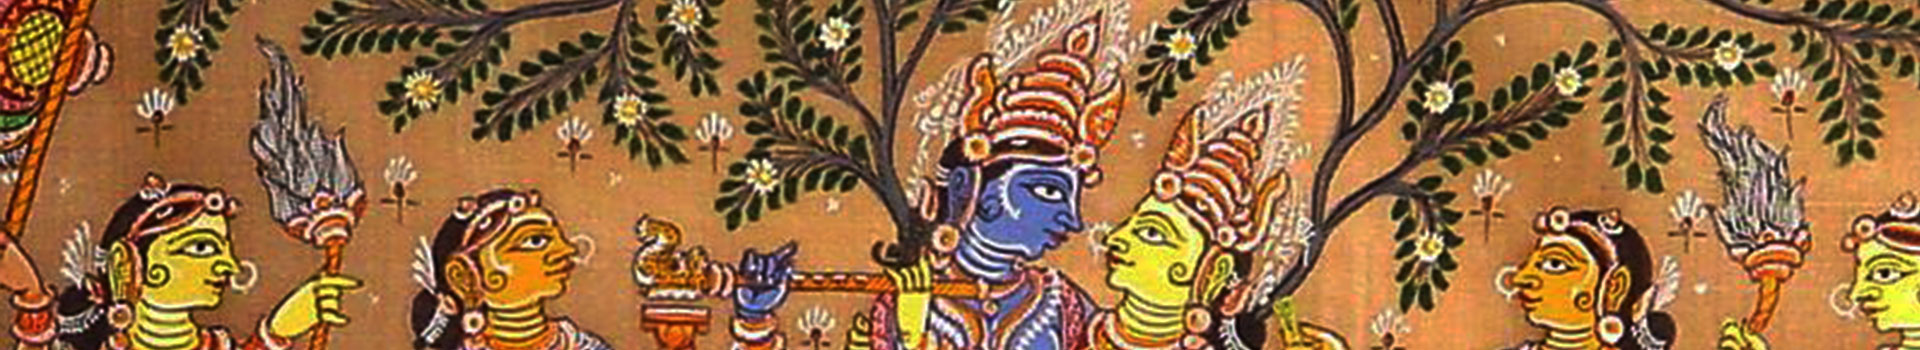 Lord Krishna the supreme God of Love